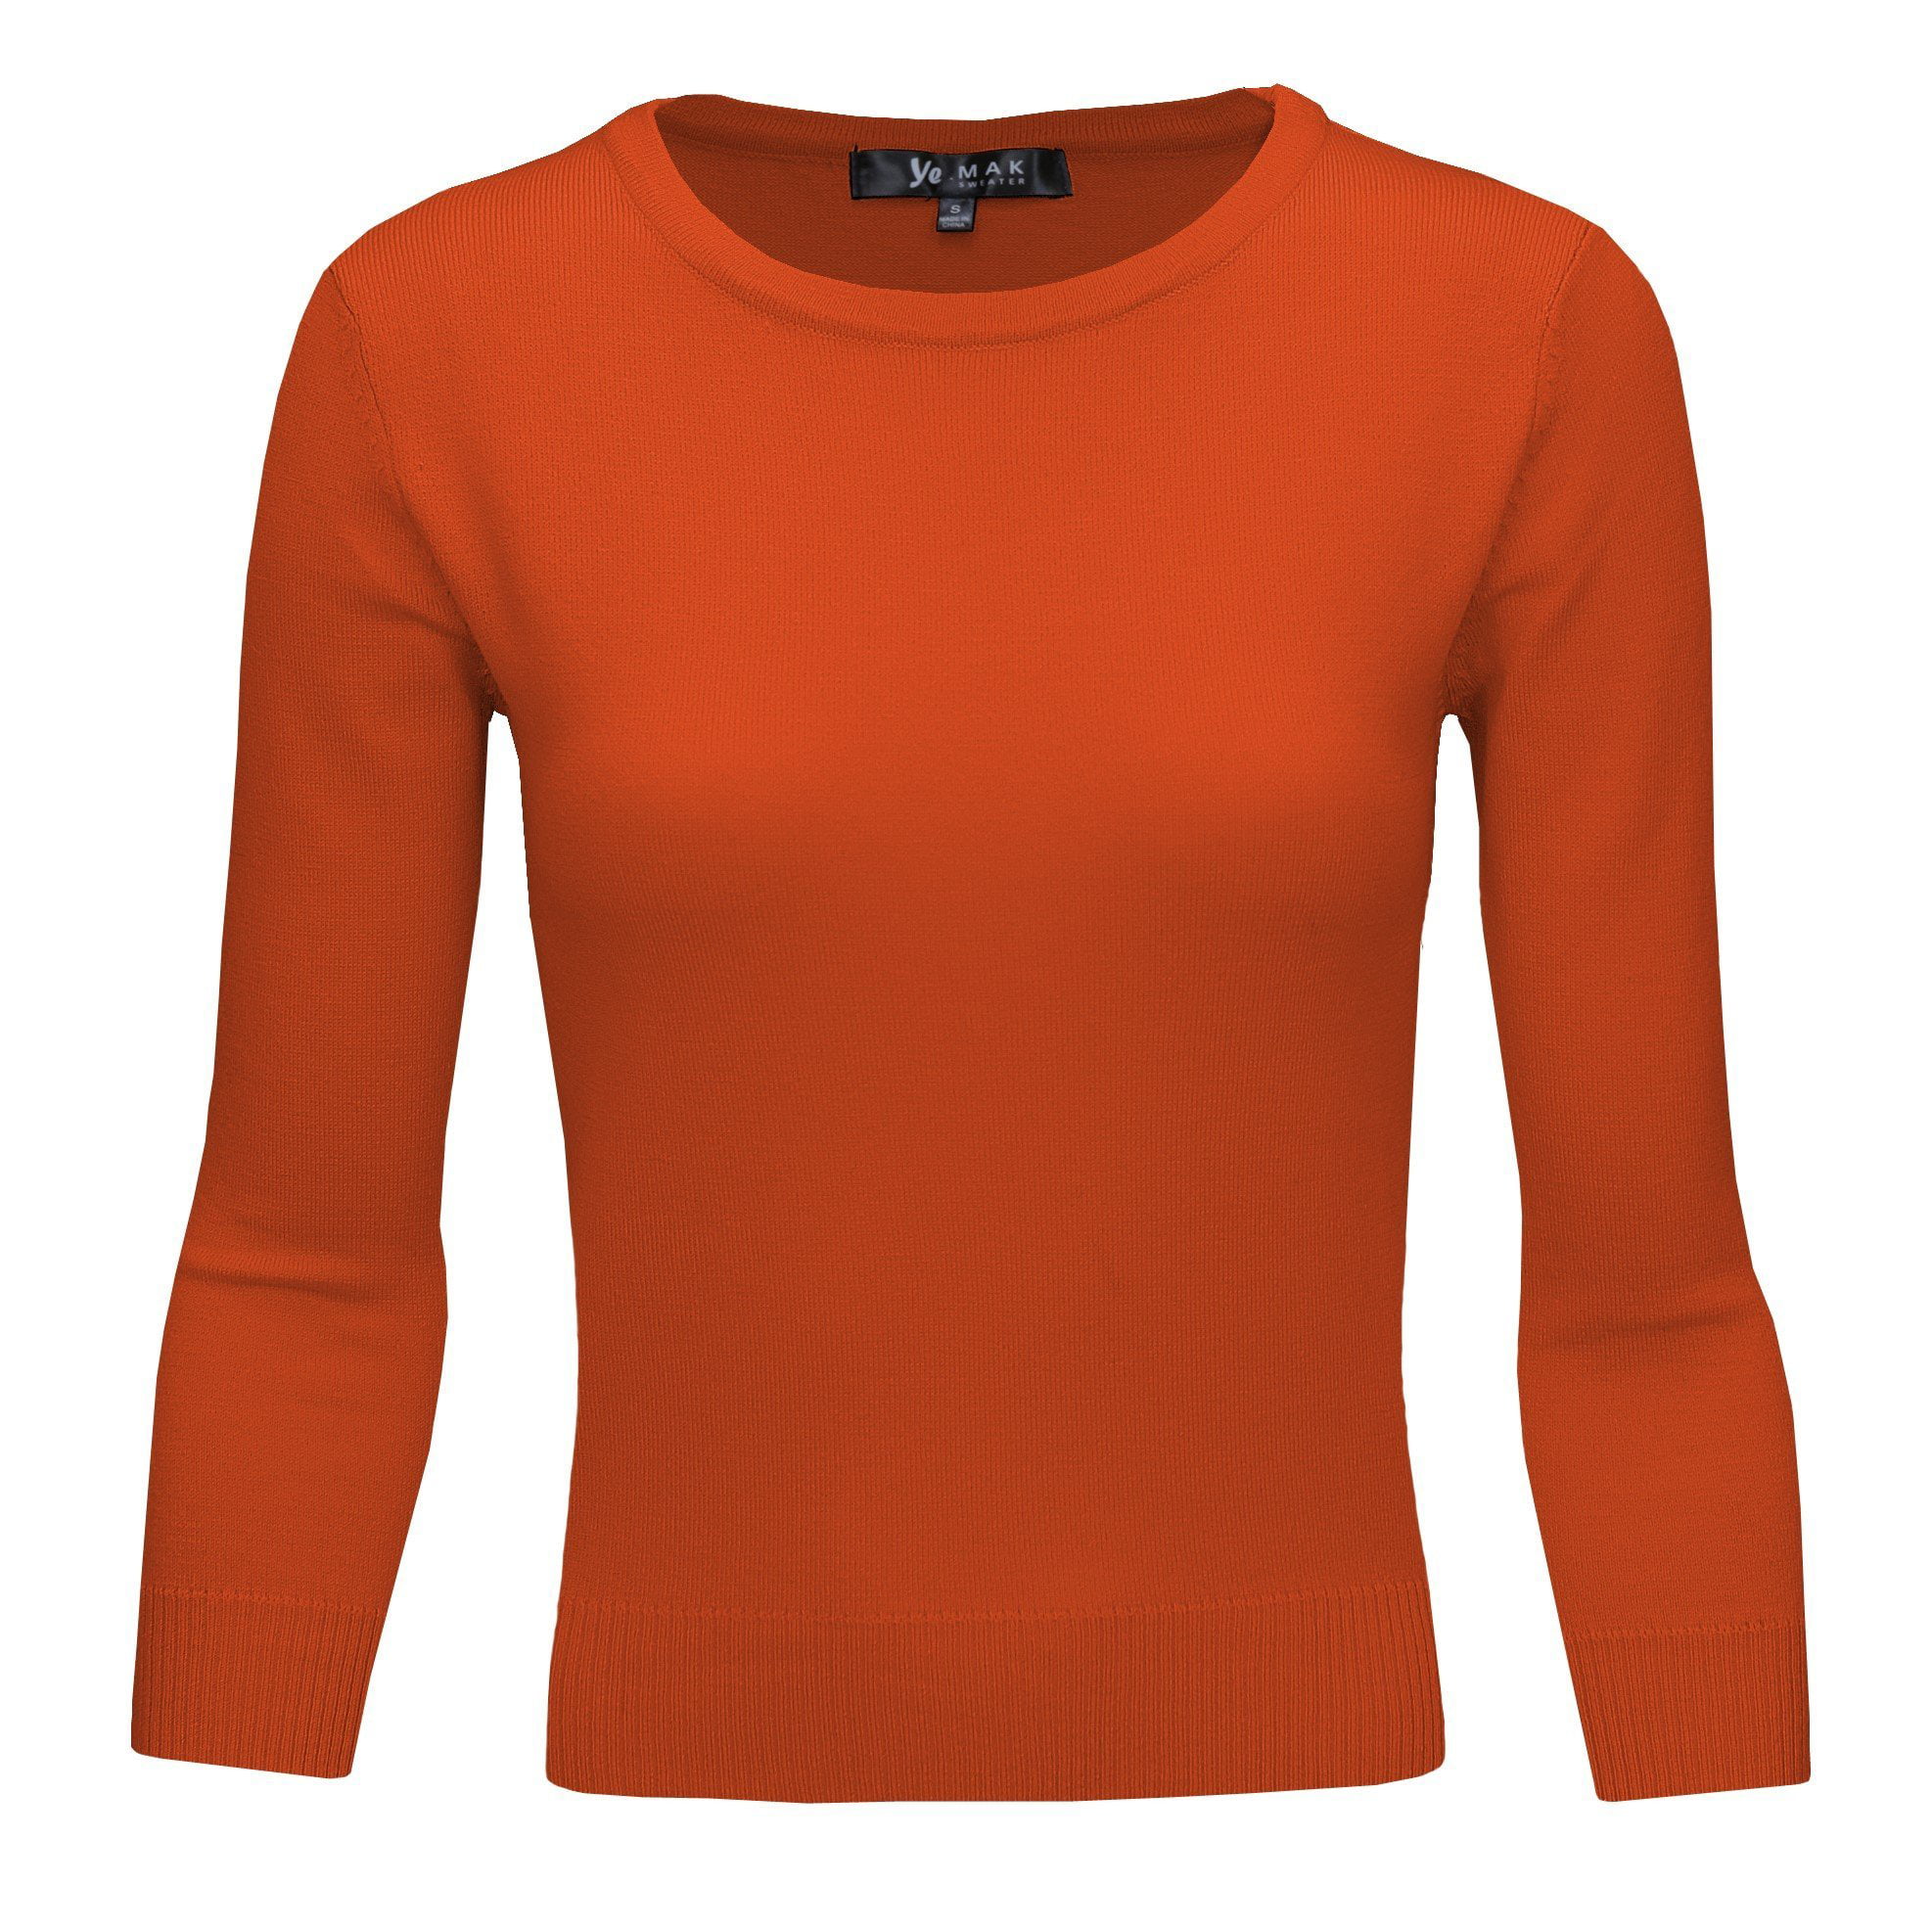 YEMAK Women's 3/4 Sleeve Crewneck Lightweight Basic Casual knit Pullover Sweater MK3636-DOR-M